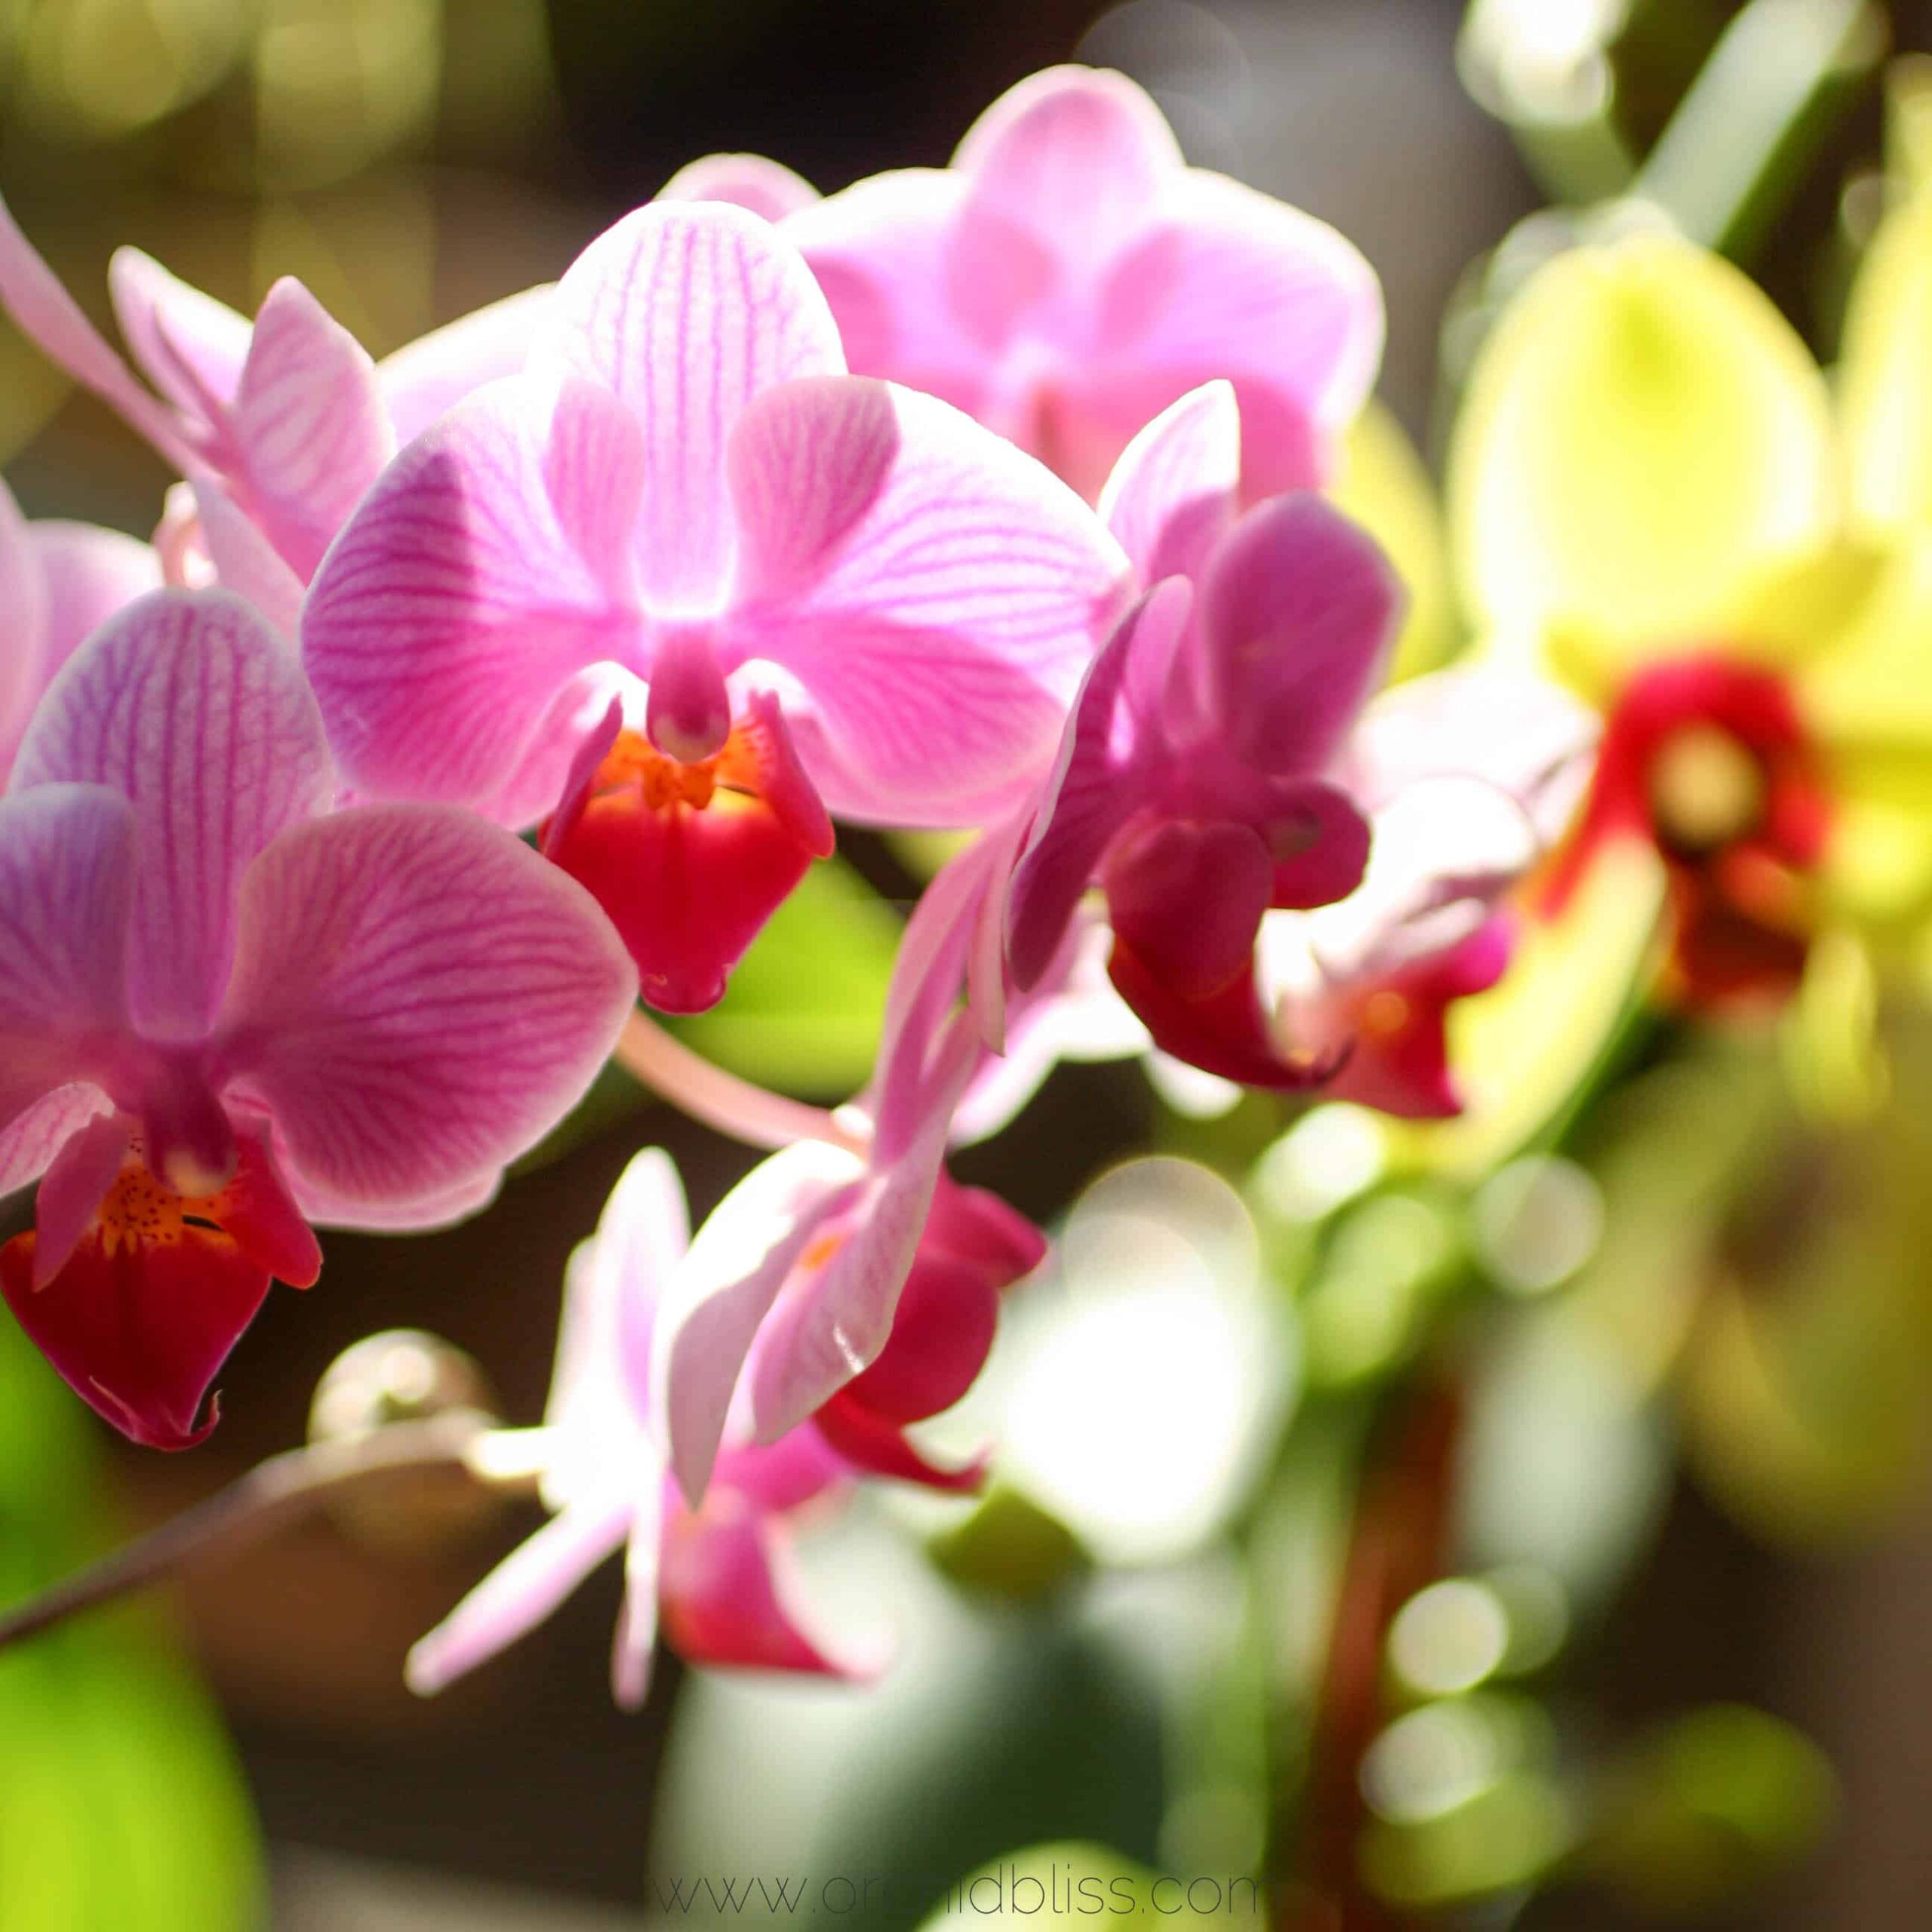 use best potting media - orchid soil